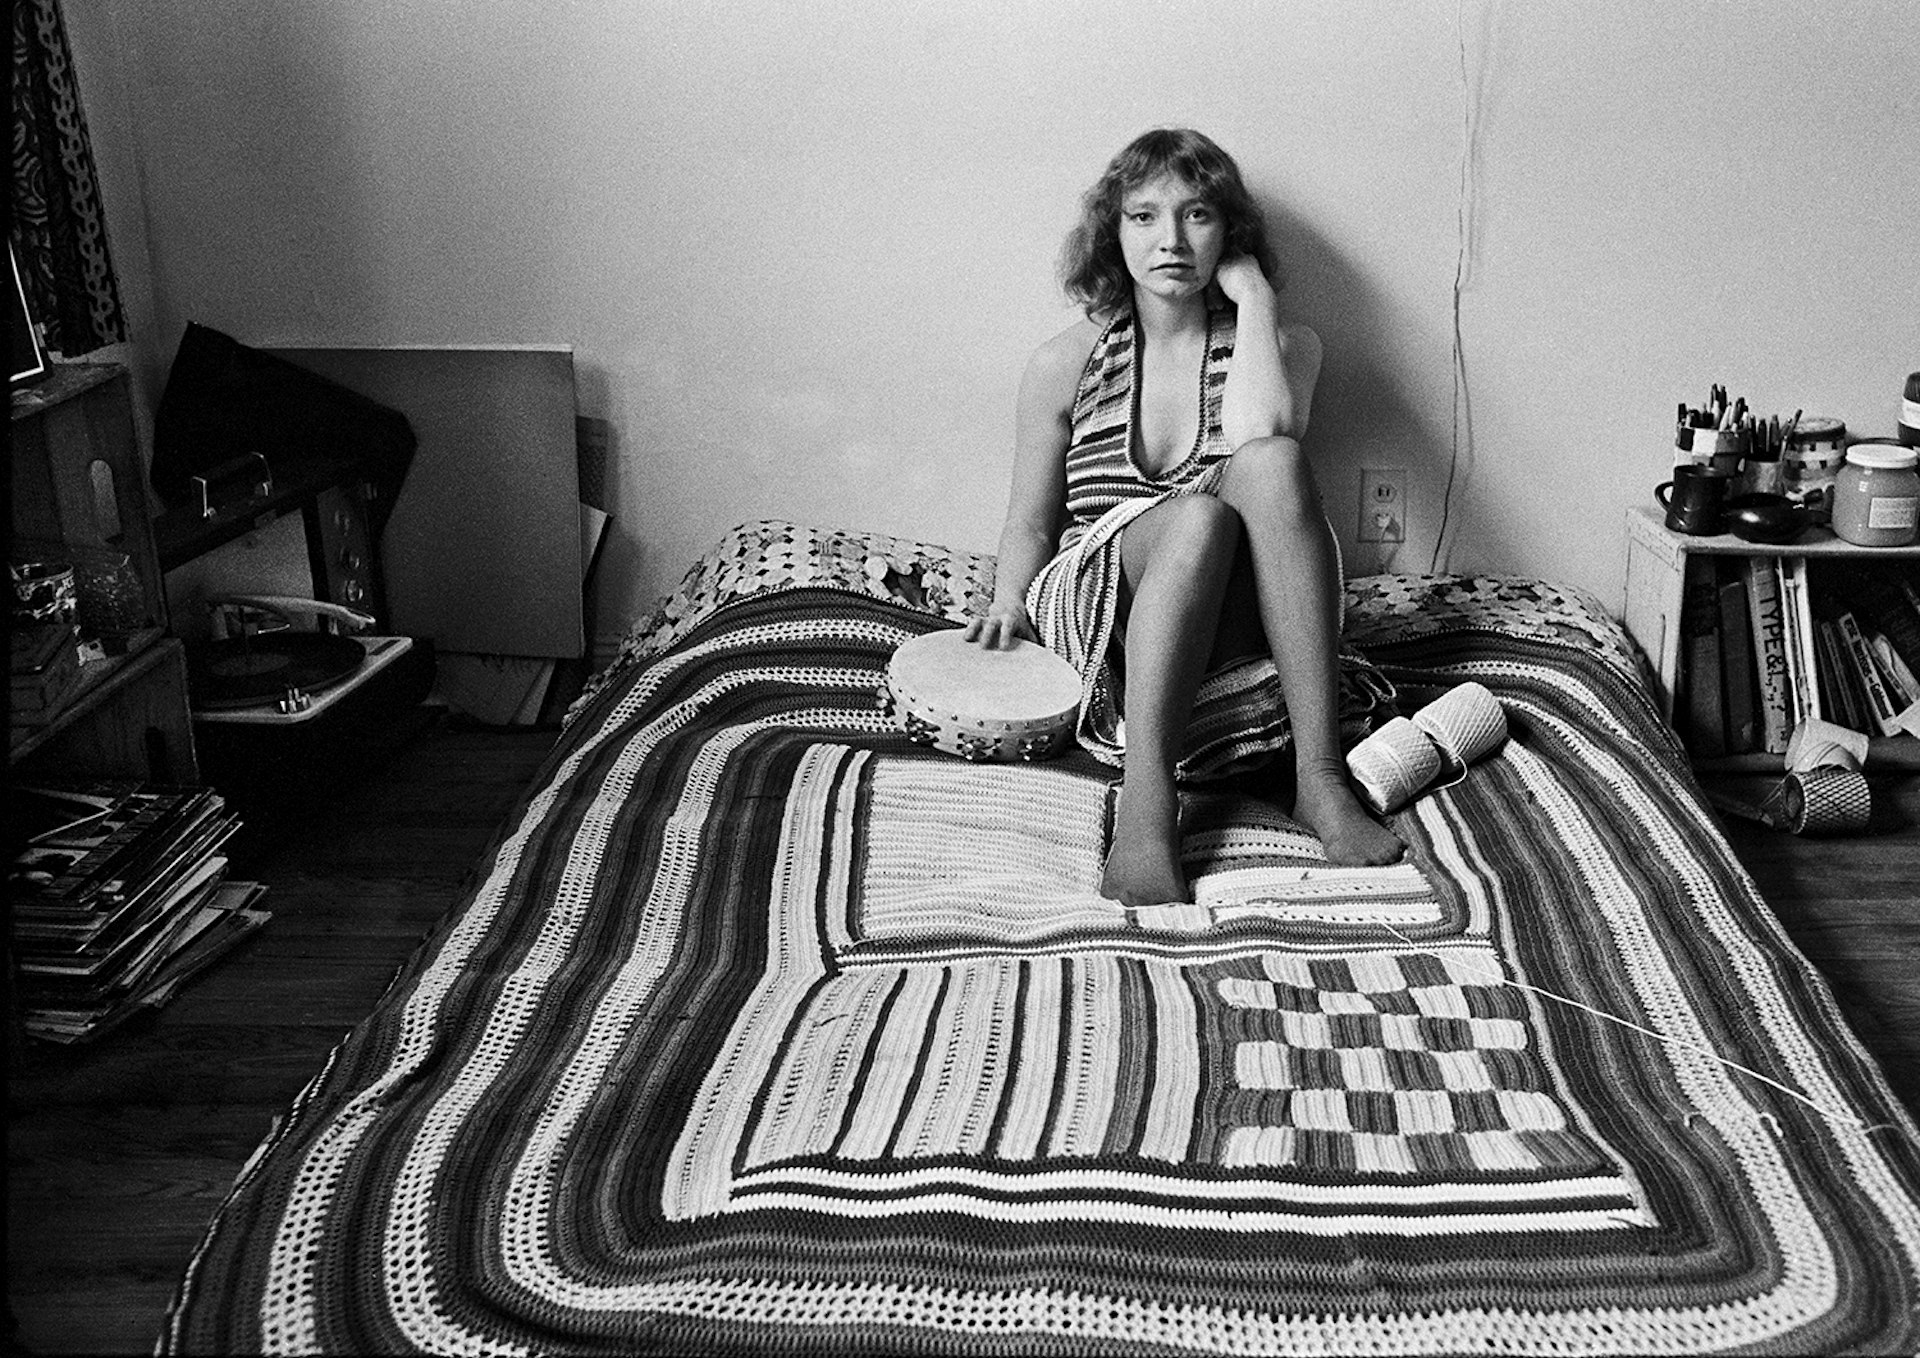 Crochet girl's bedroom, late 60's